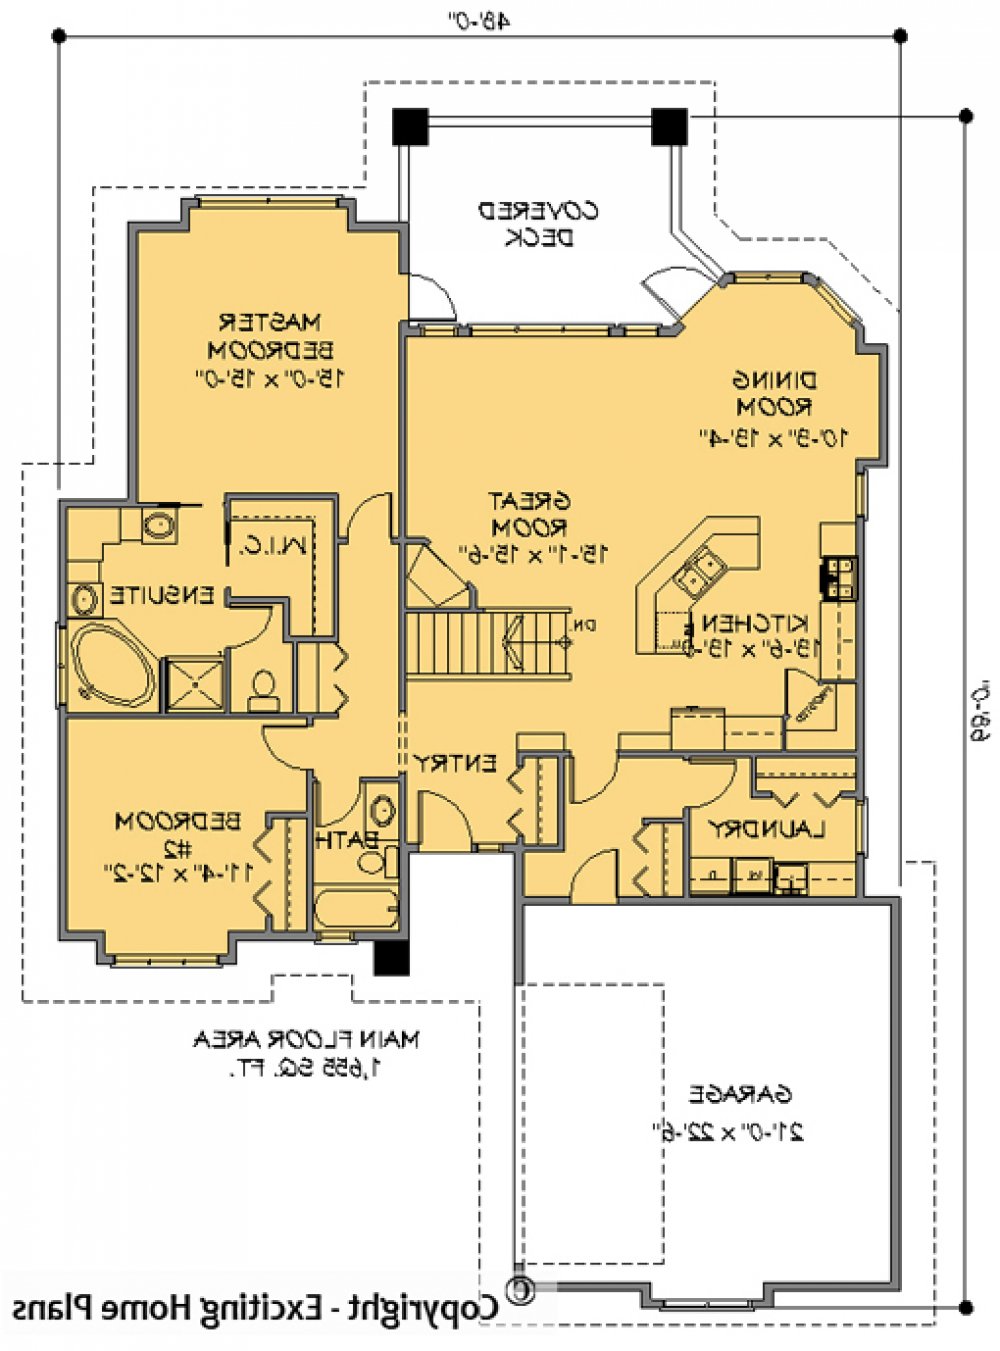 House Plan E1057-10 Main Floor Plan REVERSE